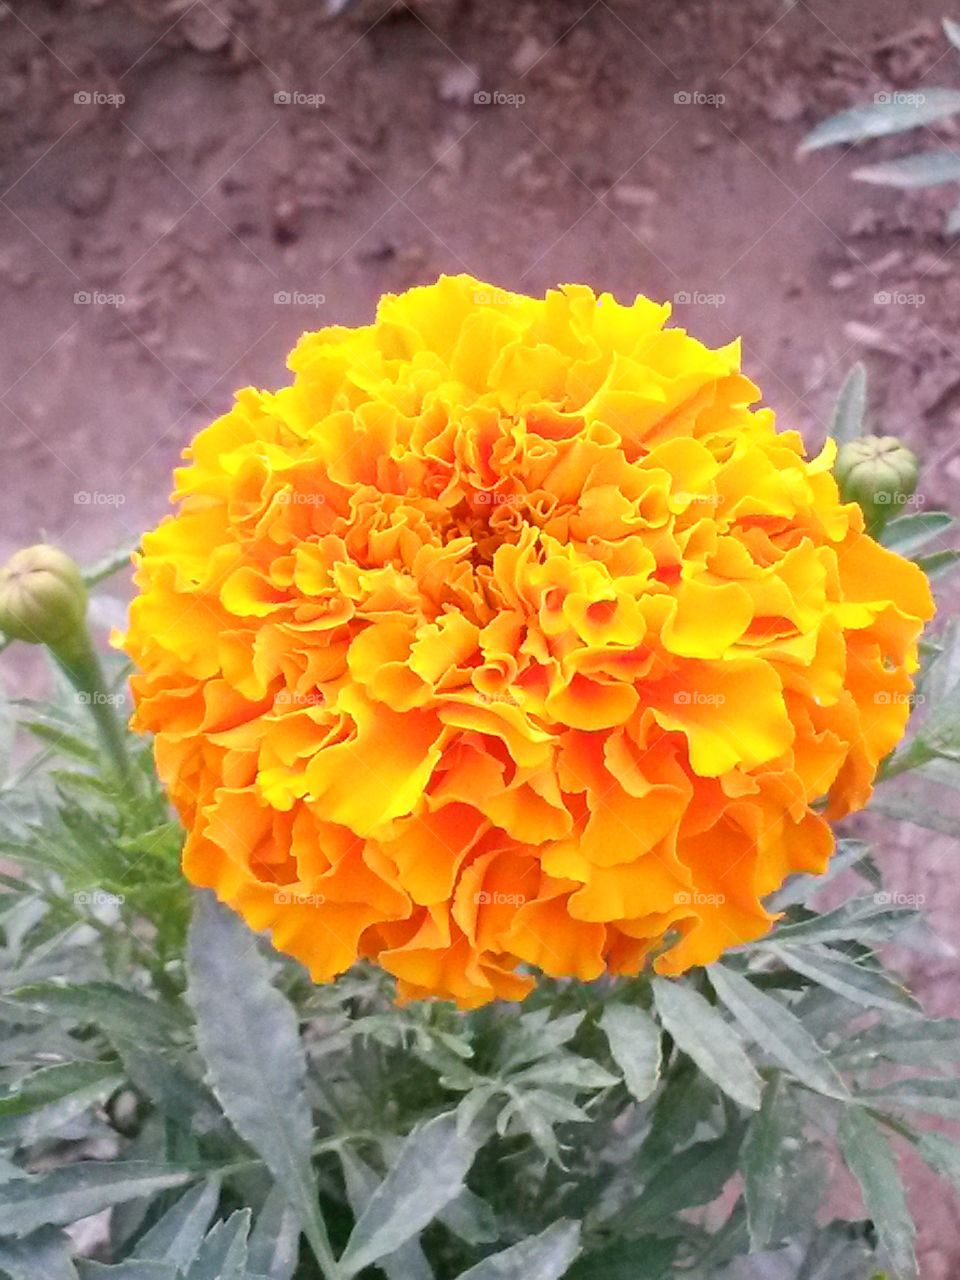 Nice yellow flower